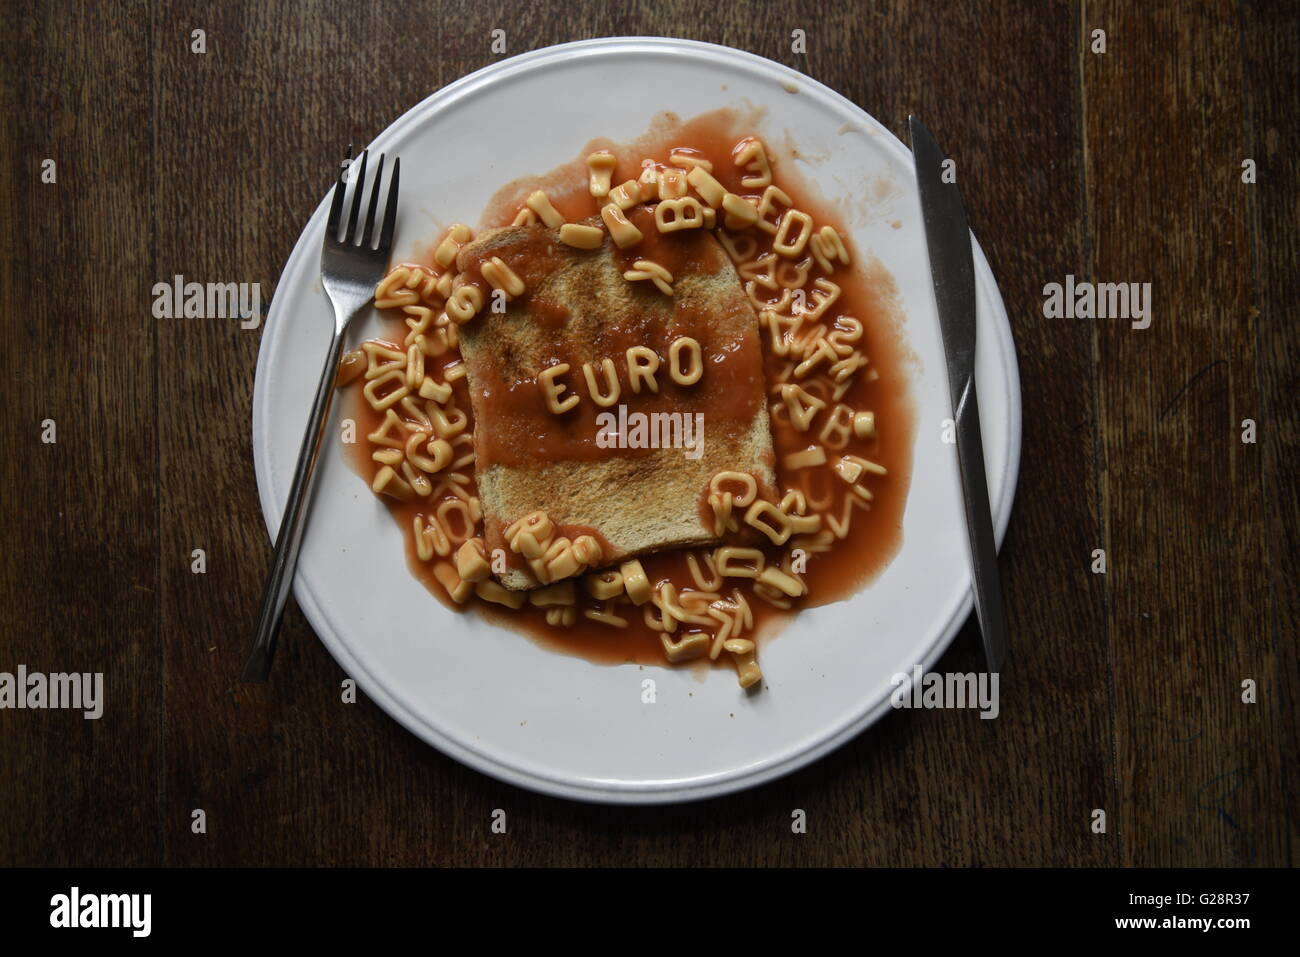 Euro - EU Referendum concept image in kids alphabet pasta on toast Stock Photo